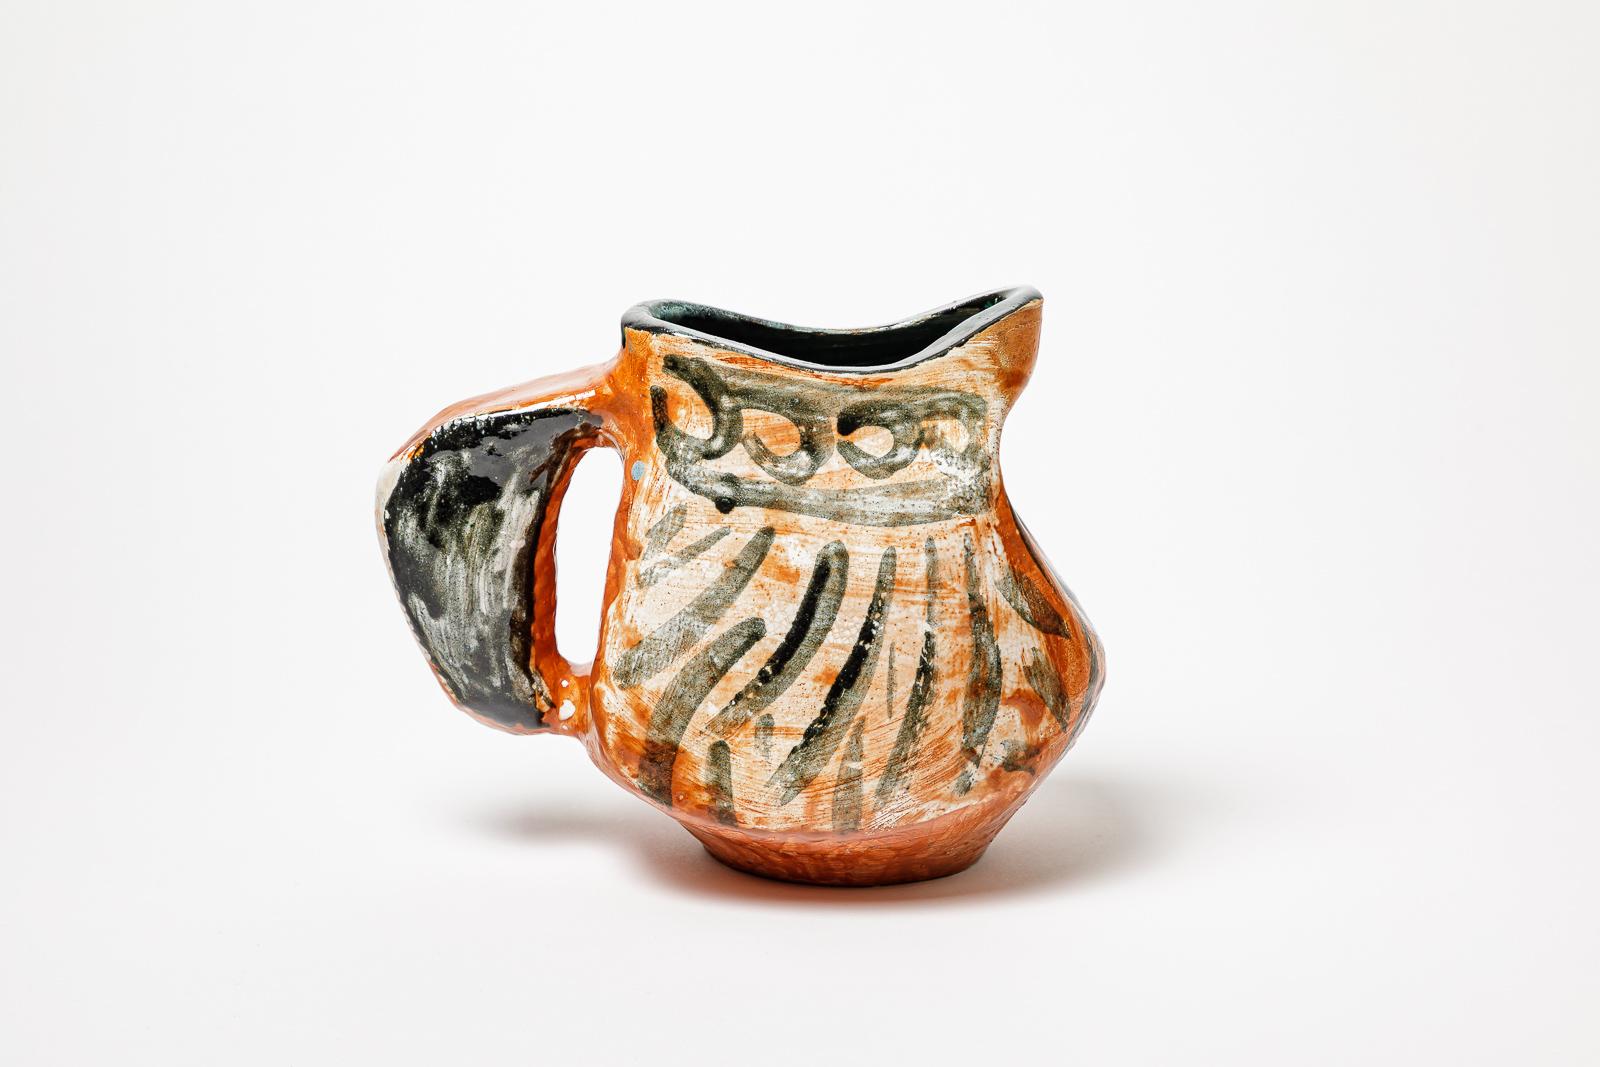 Orange and black glazed ceramic pitcher.
Artist monogram under the base. Circa 1950-1960.
H : 8.8’ x 9.8’ x 5.9’ inches.
